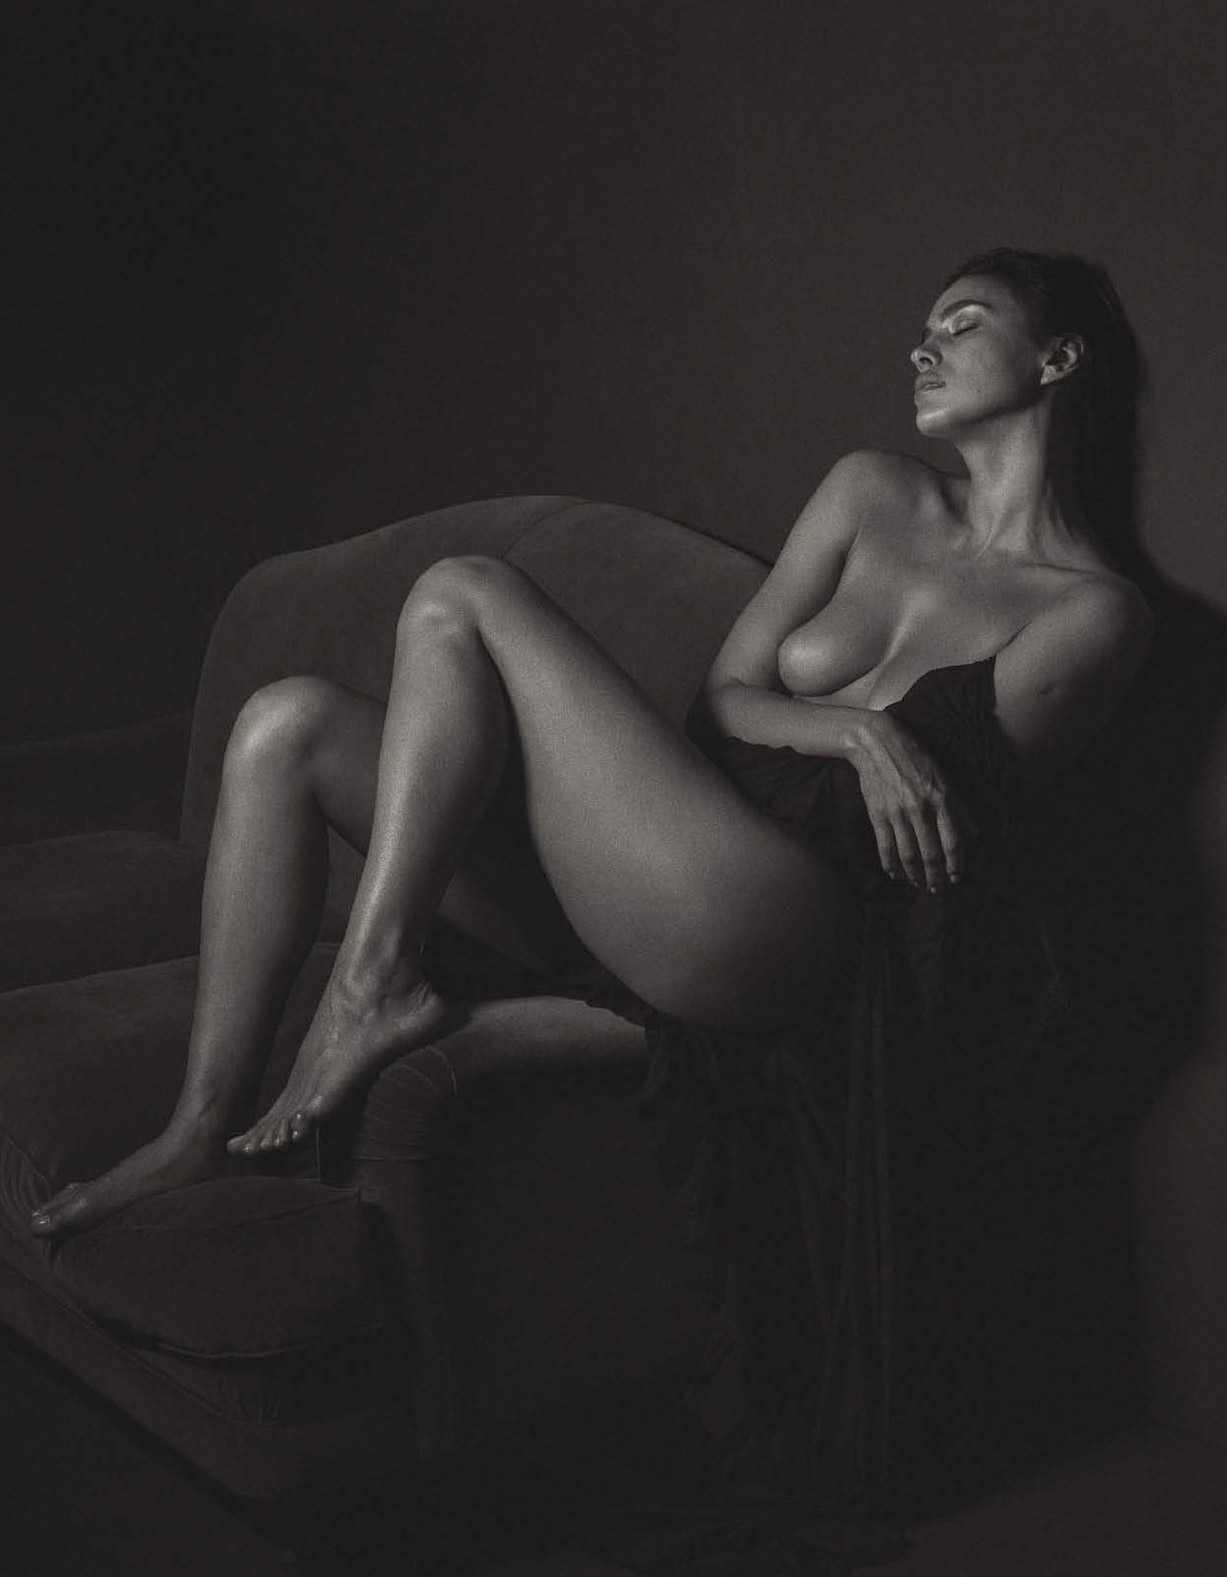 голая Ирина Шейк / Irina Shayk nude by Mario Sorrenti - GQ Italia september 2016